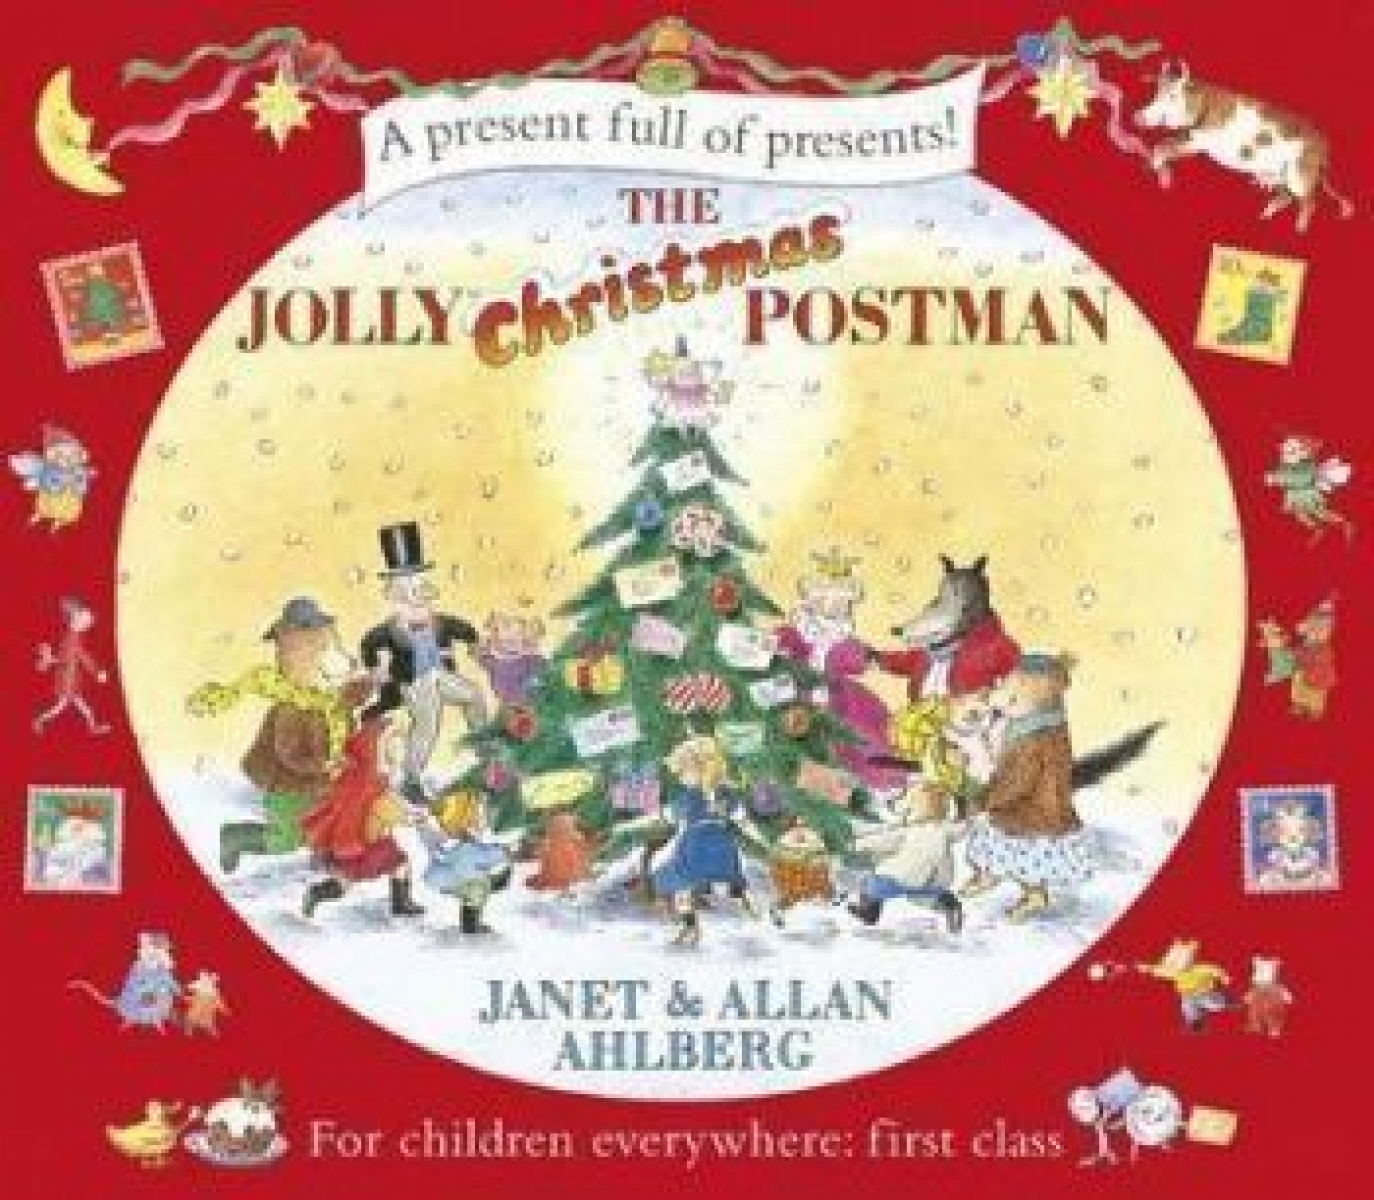 Ahlberg Allan Jolly Christmas Postman 